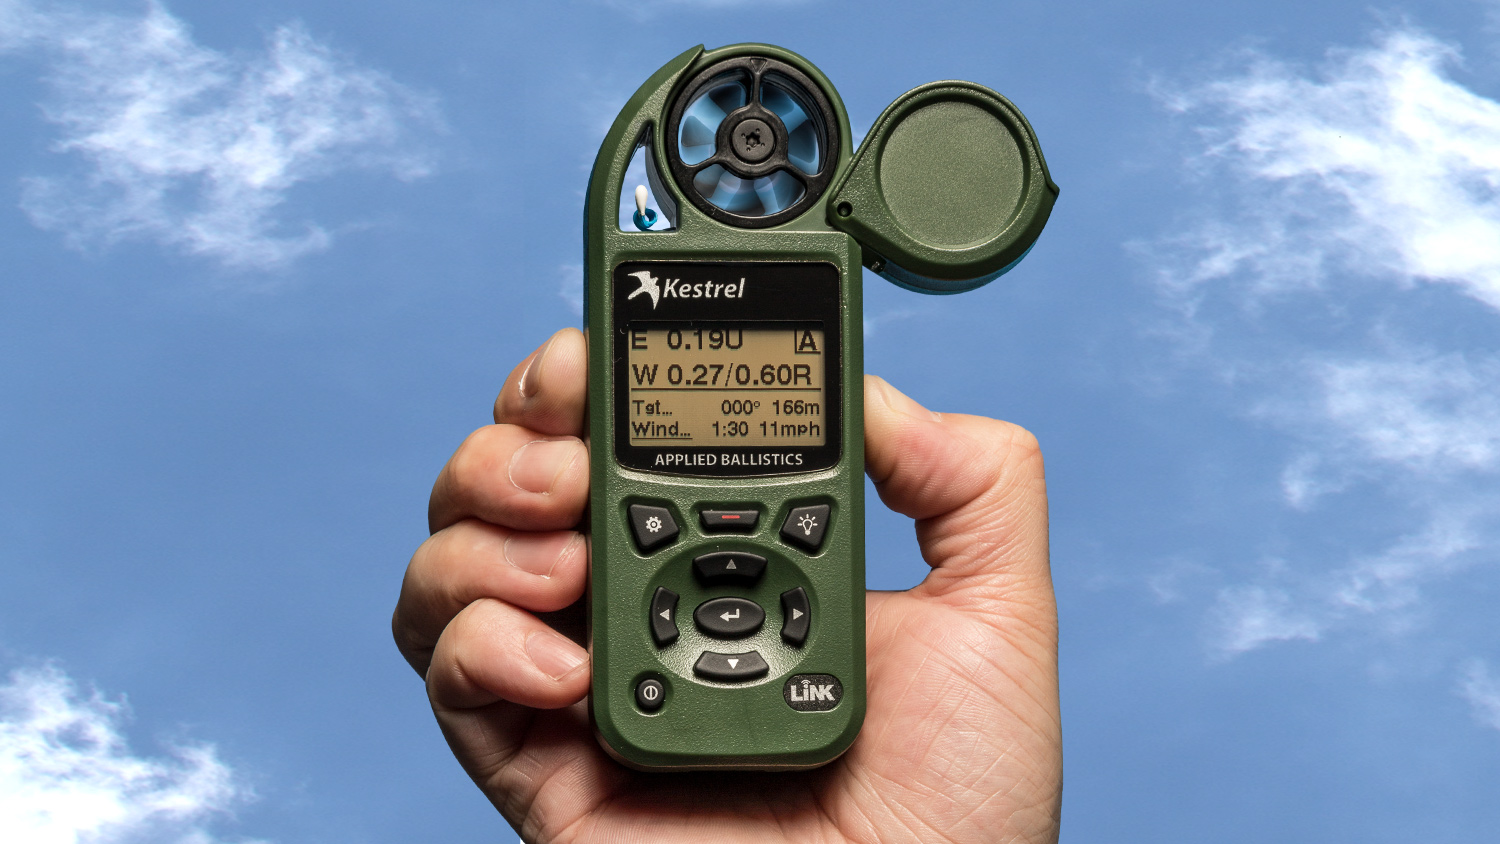 Kestrel 5700X Elite Weather Meter With Applied Ballistics and LiNK